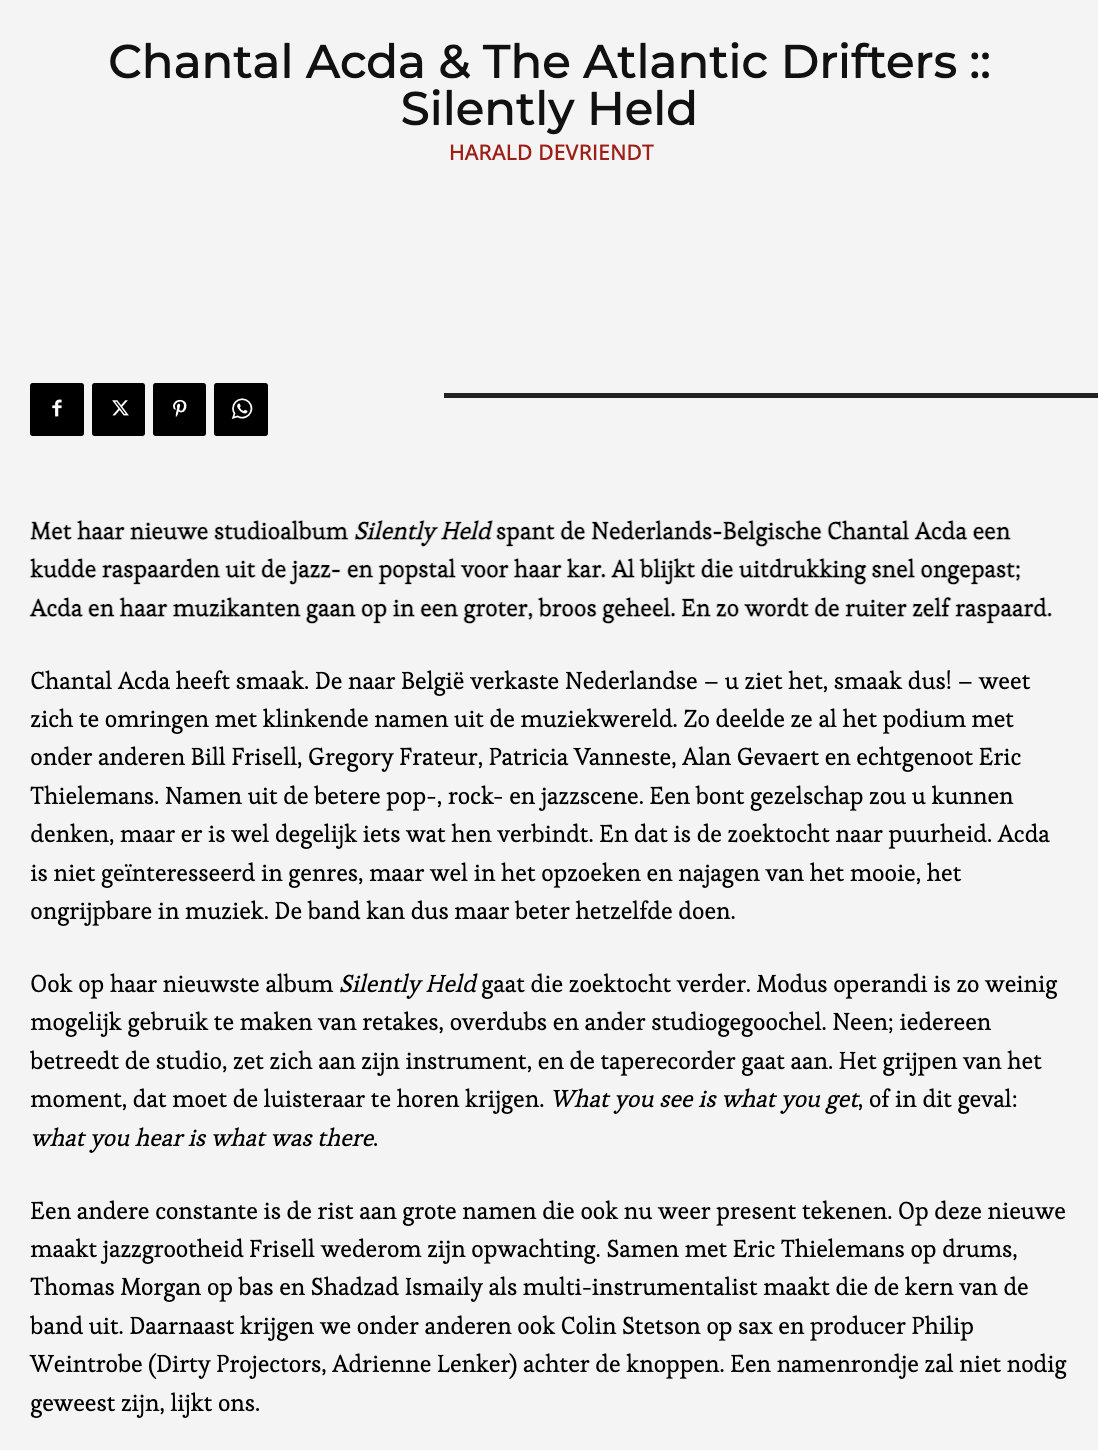 Chantal Acda & The Atlantic Drifters Silently Held album review Enola